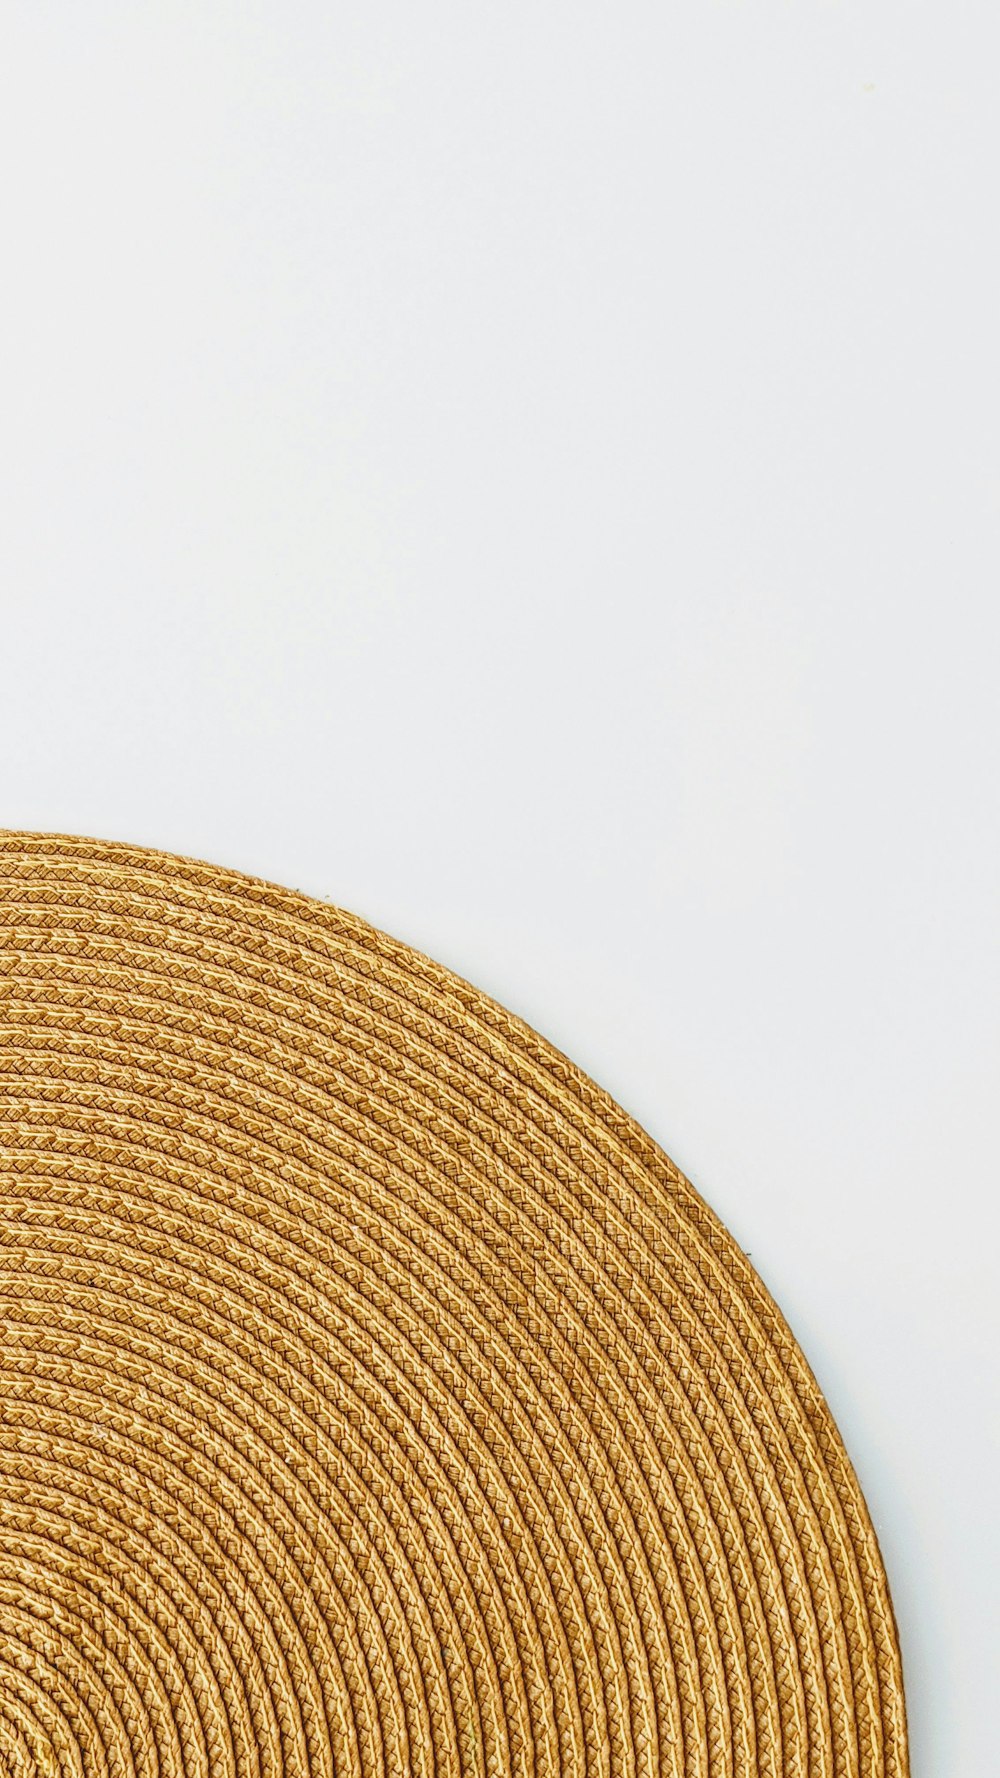 brown round textile on white surface